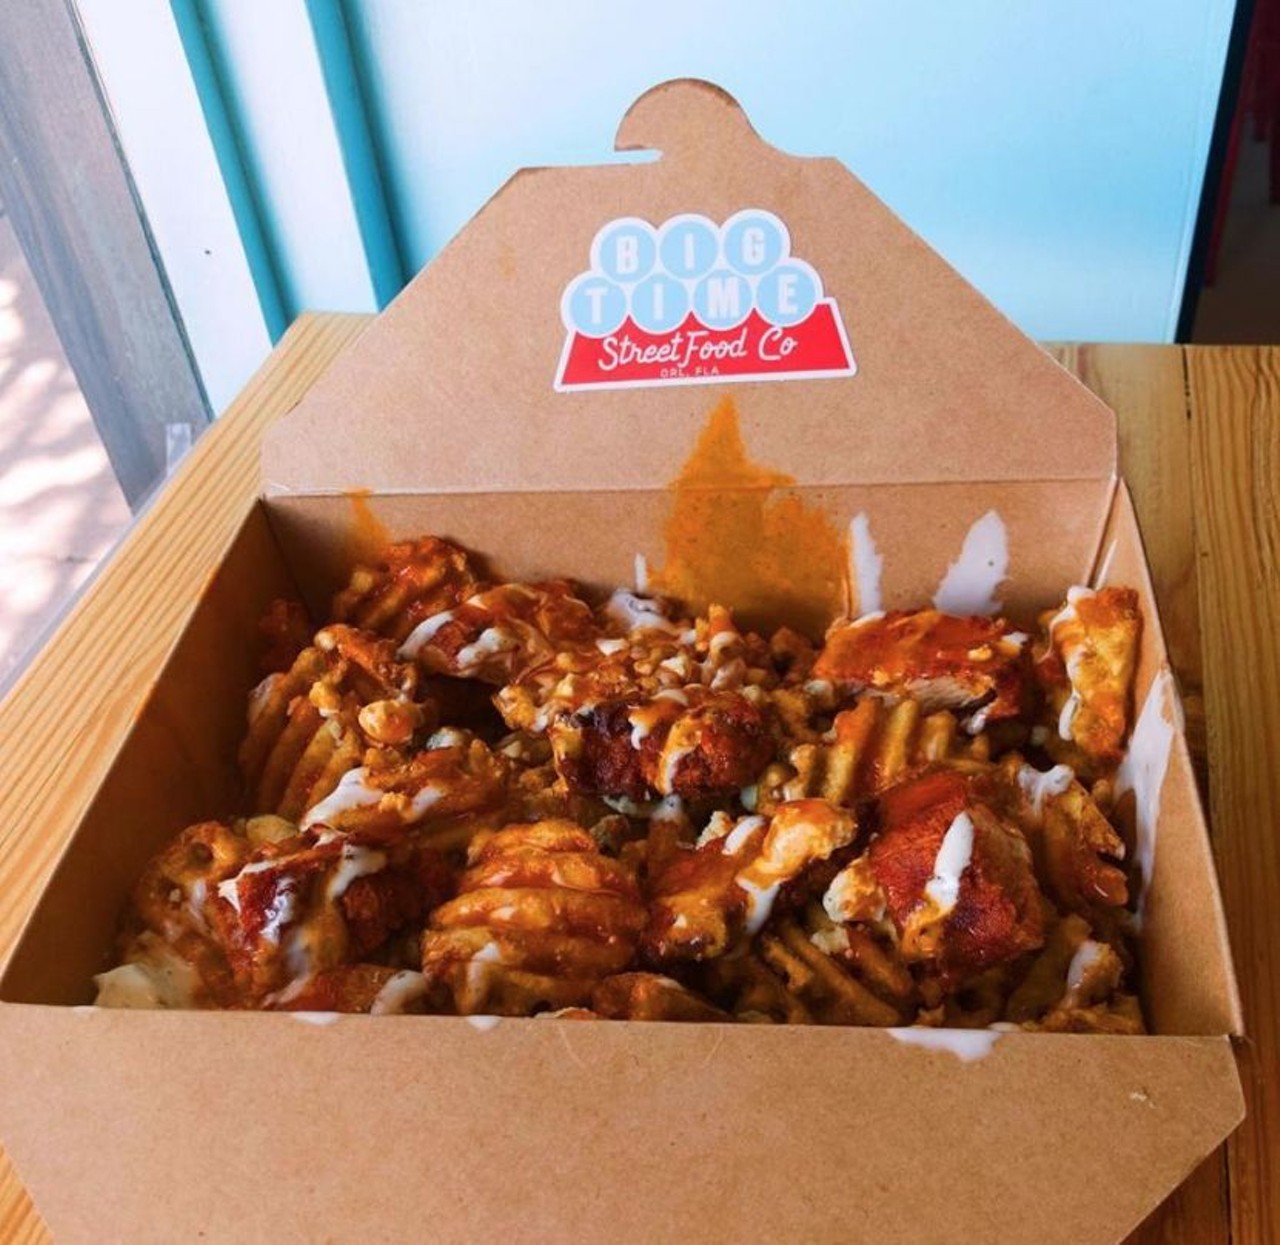 Must try: Buffalo Bird Fries
Photo via Big Time Street Food Co./Facebook